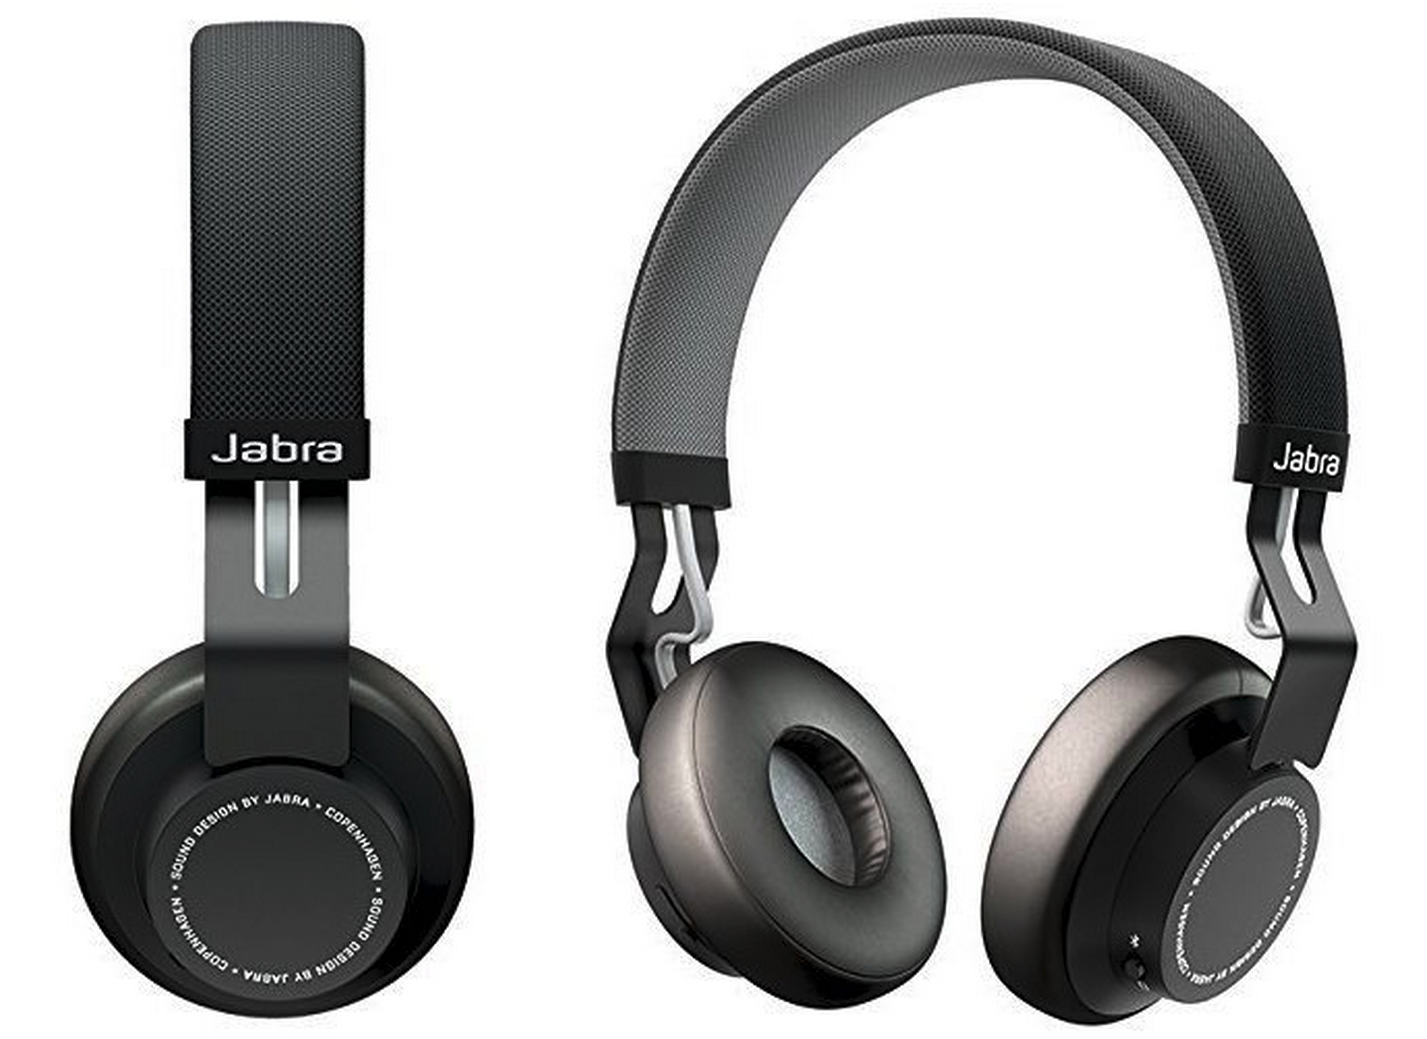 oppervlakkig metgezel Werkelijk Jabra MOVE wireless on-ear headphones in black $70 shipped (Reg. $100), more